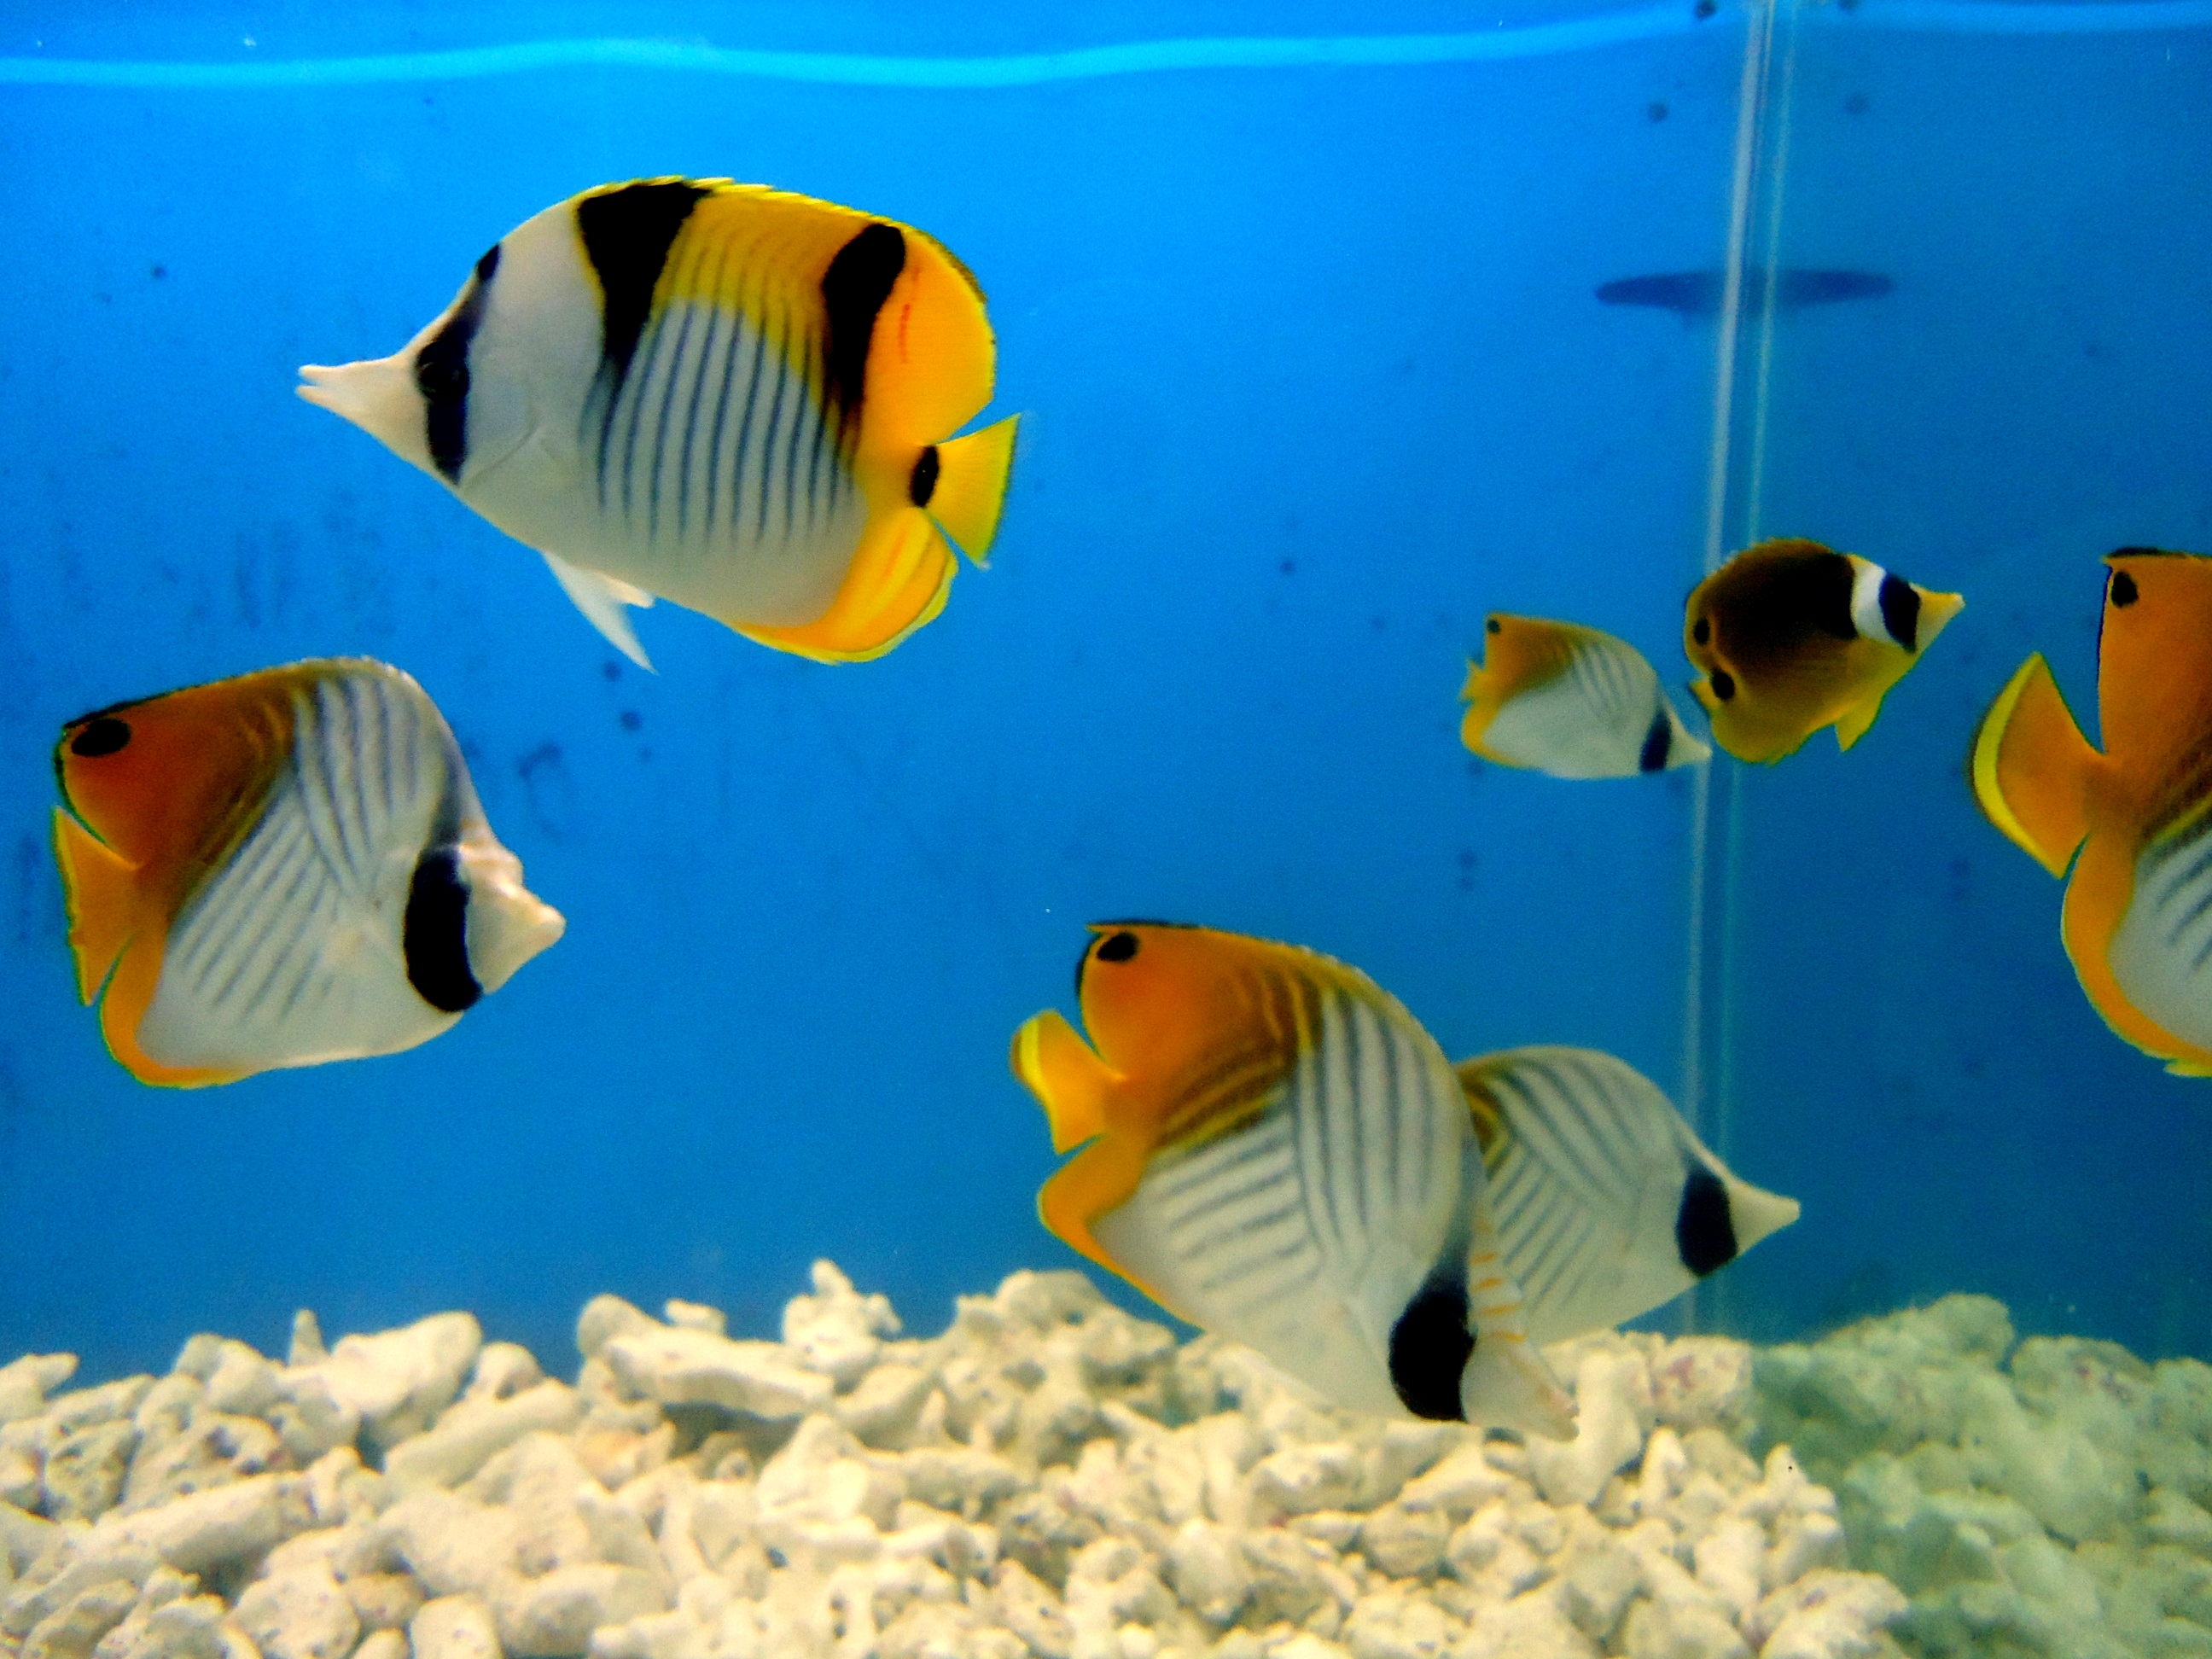 File:Yellow Aquarium Fish.JPG - Wikimedia Commons